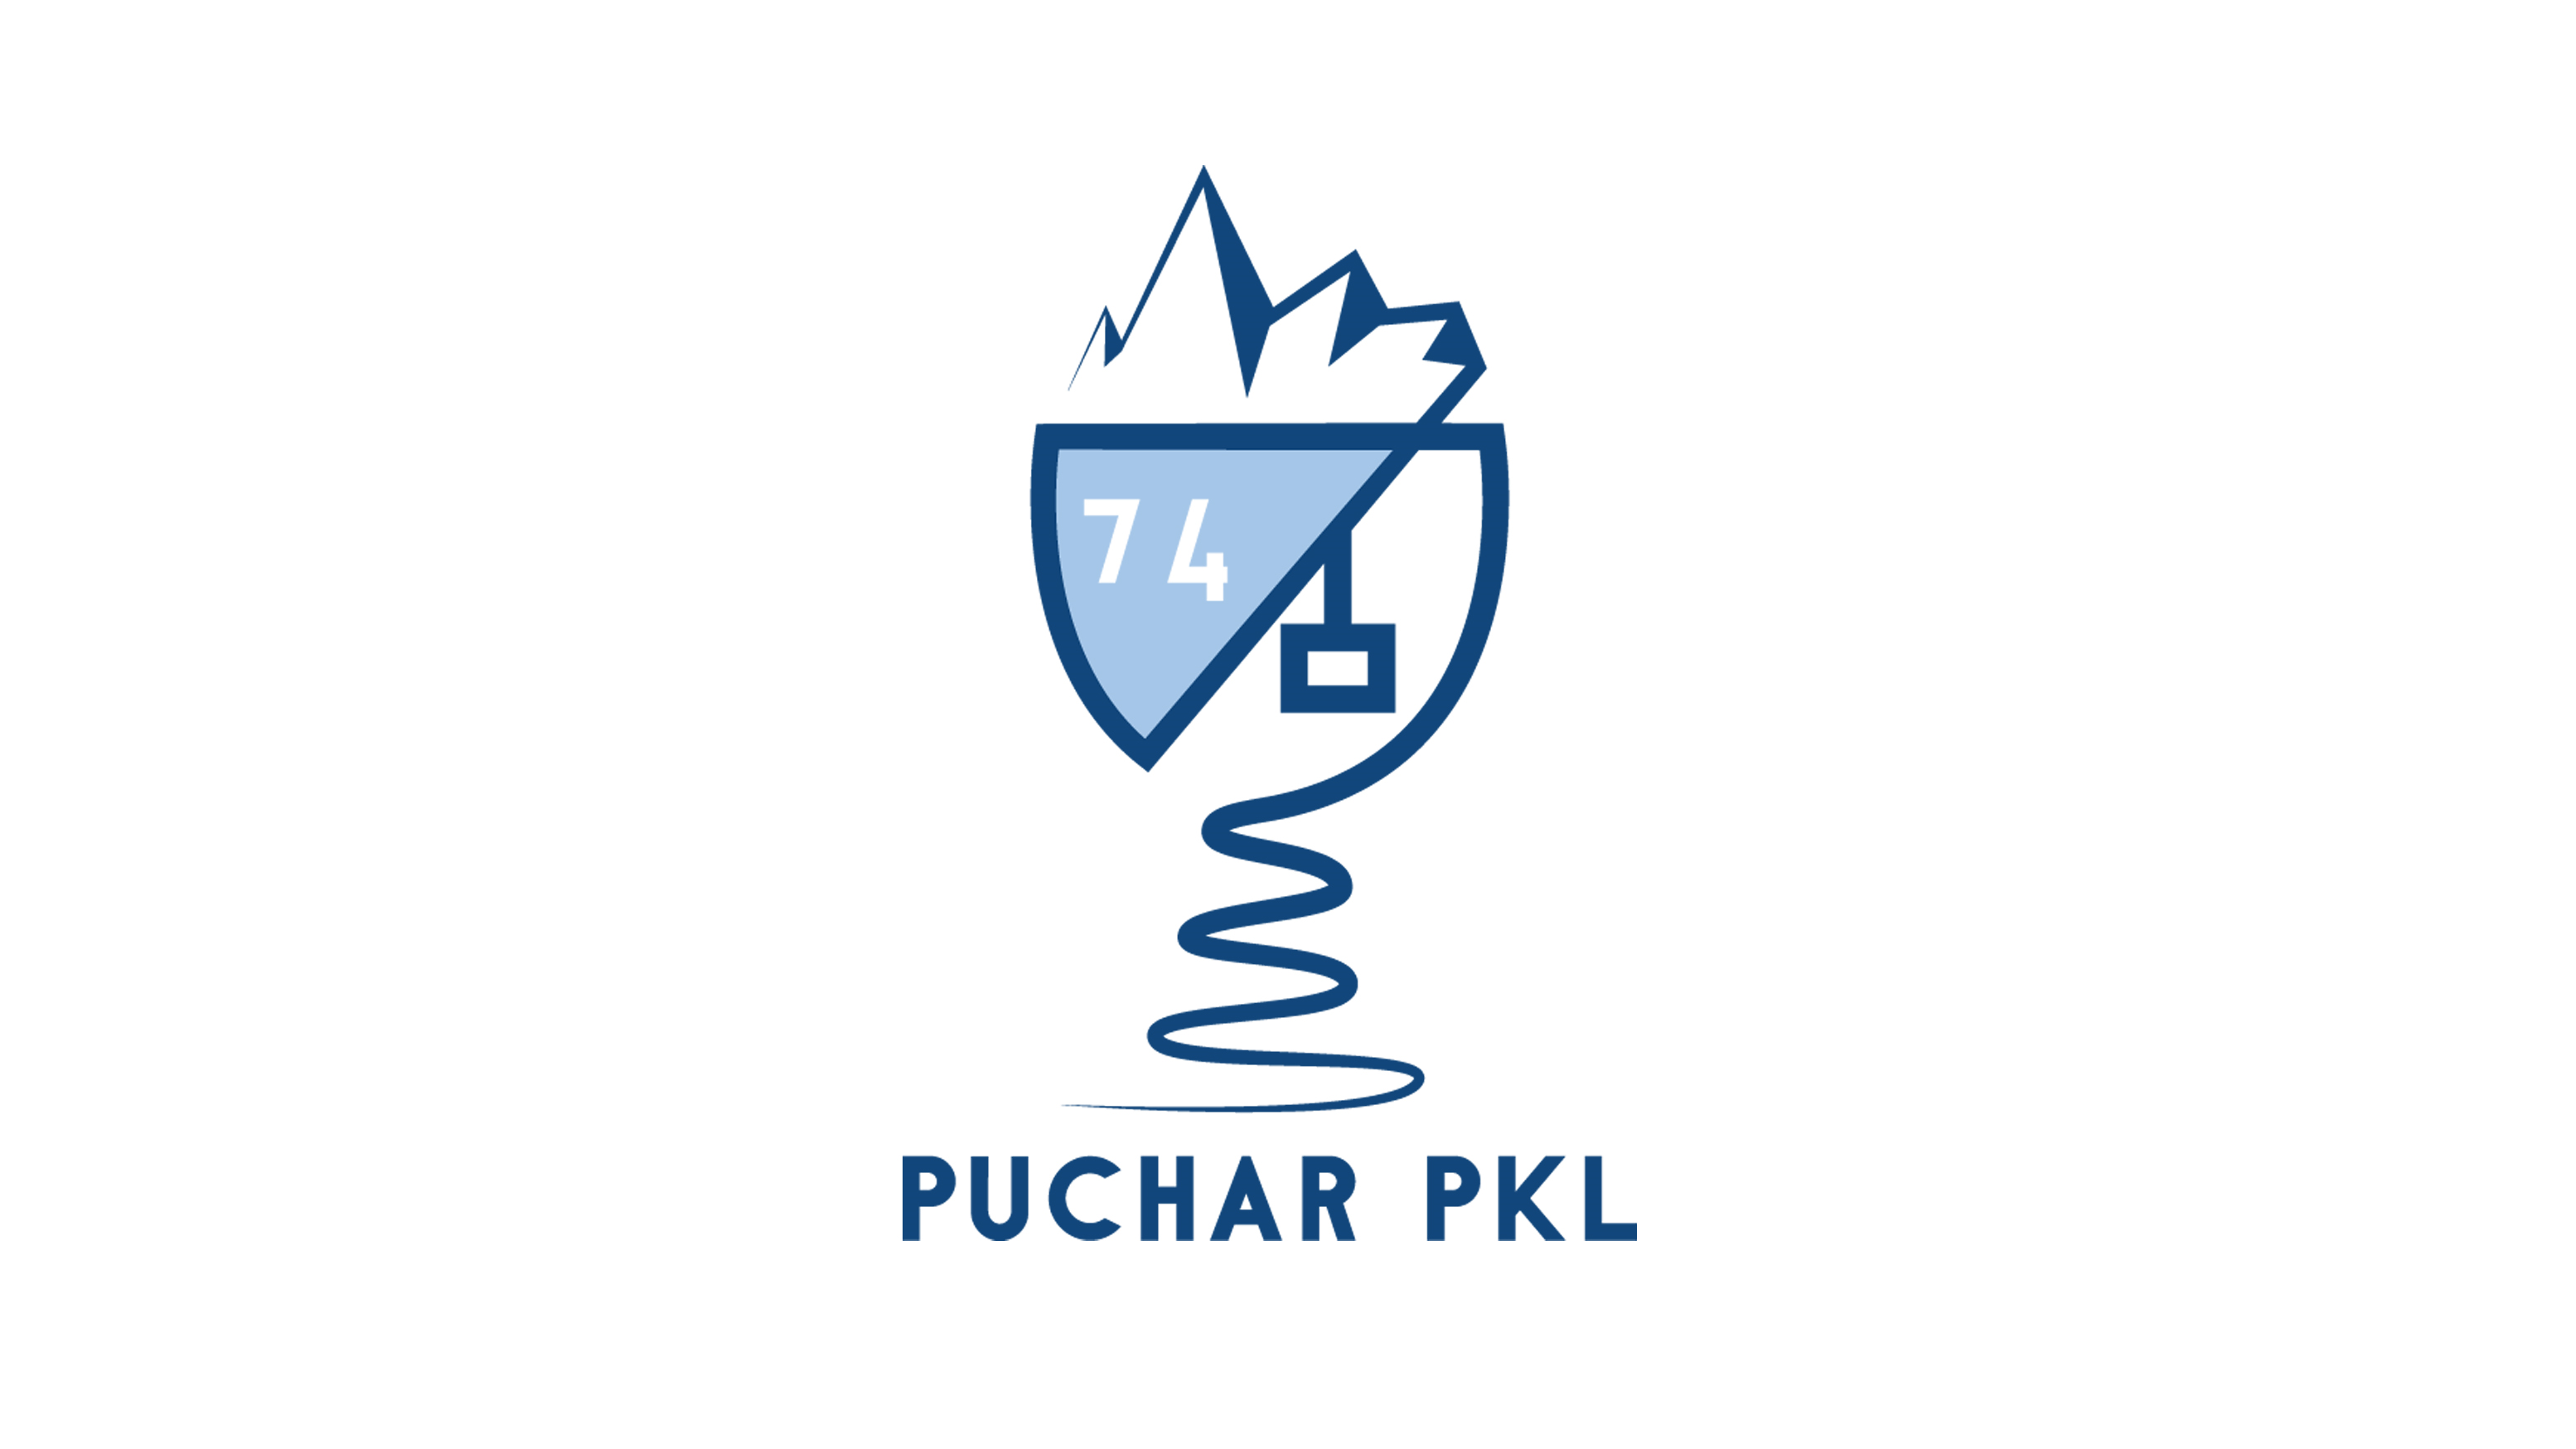 74. Puchar PKL logo